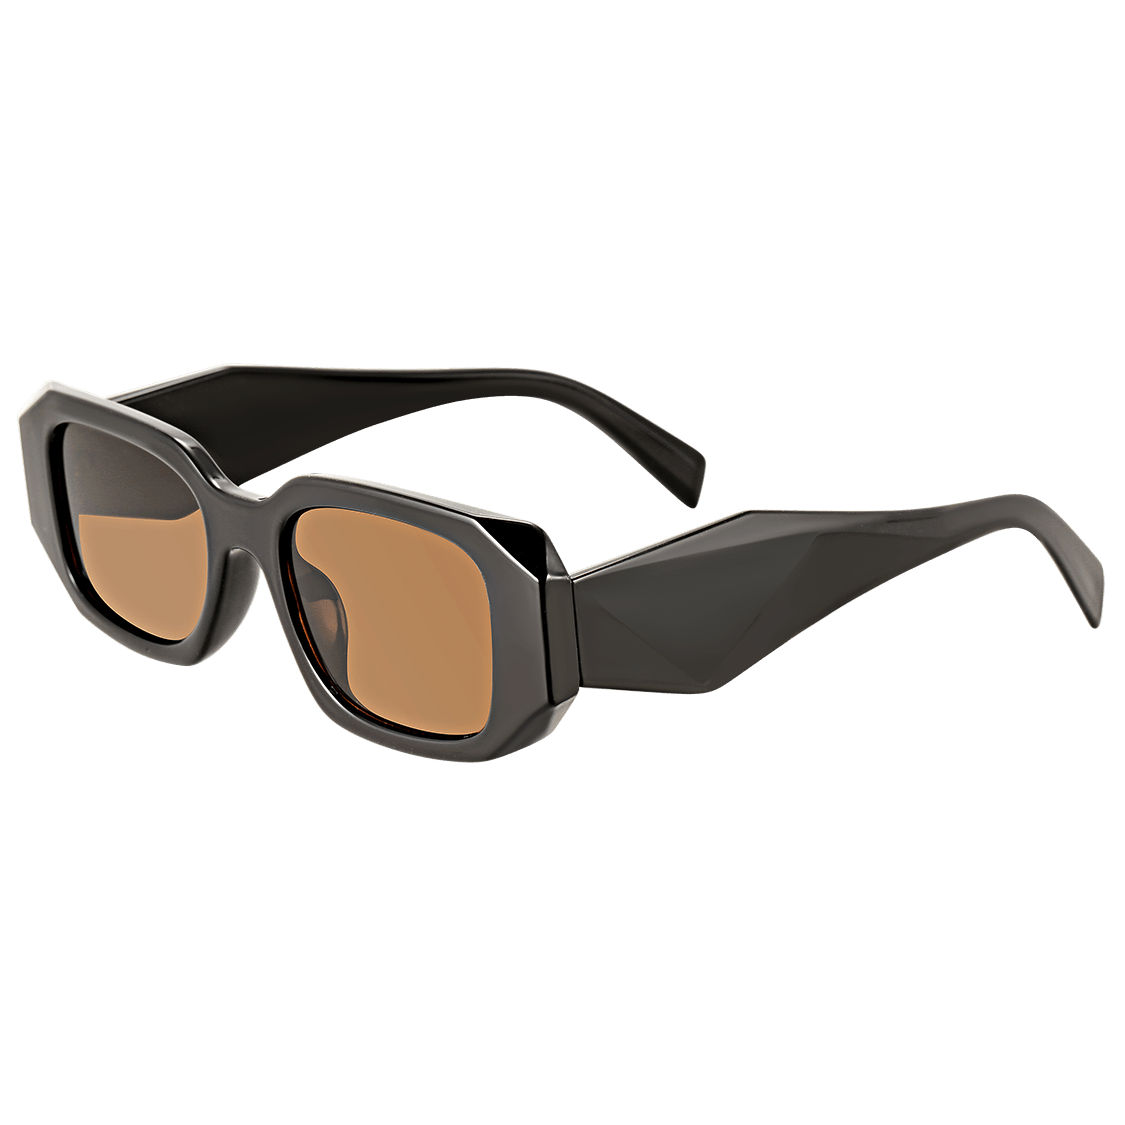 Classic Prada sunglasses style